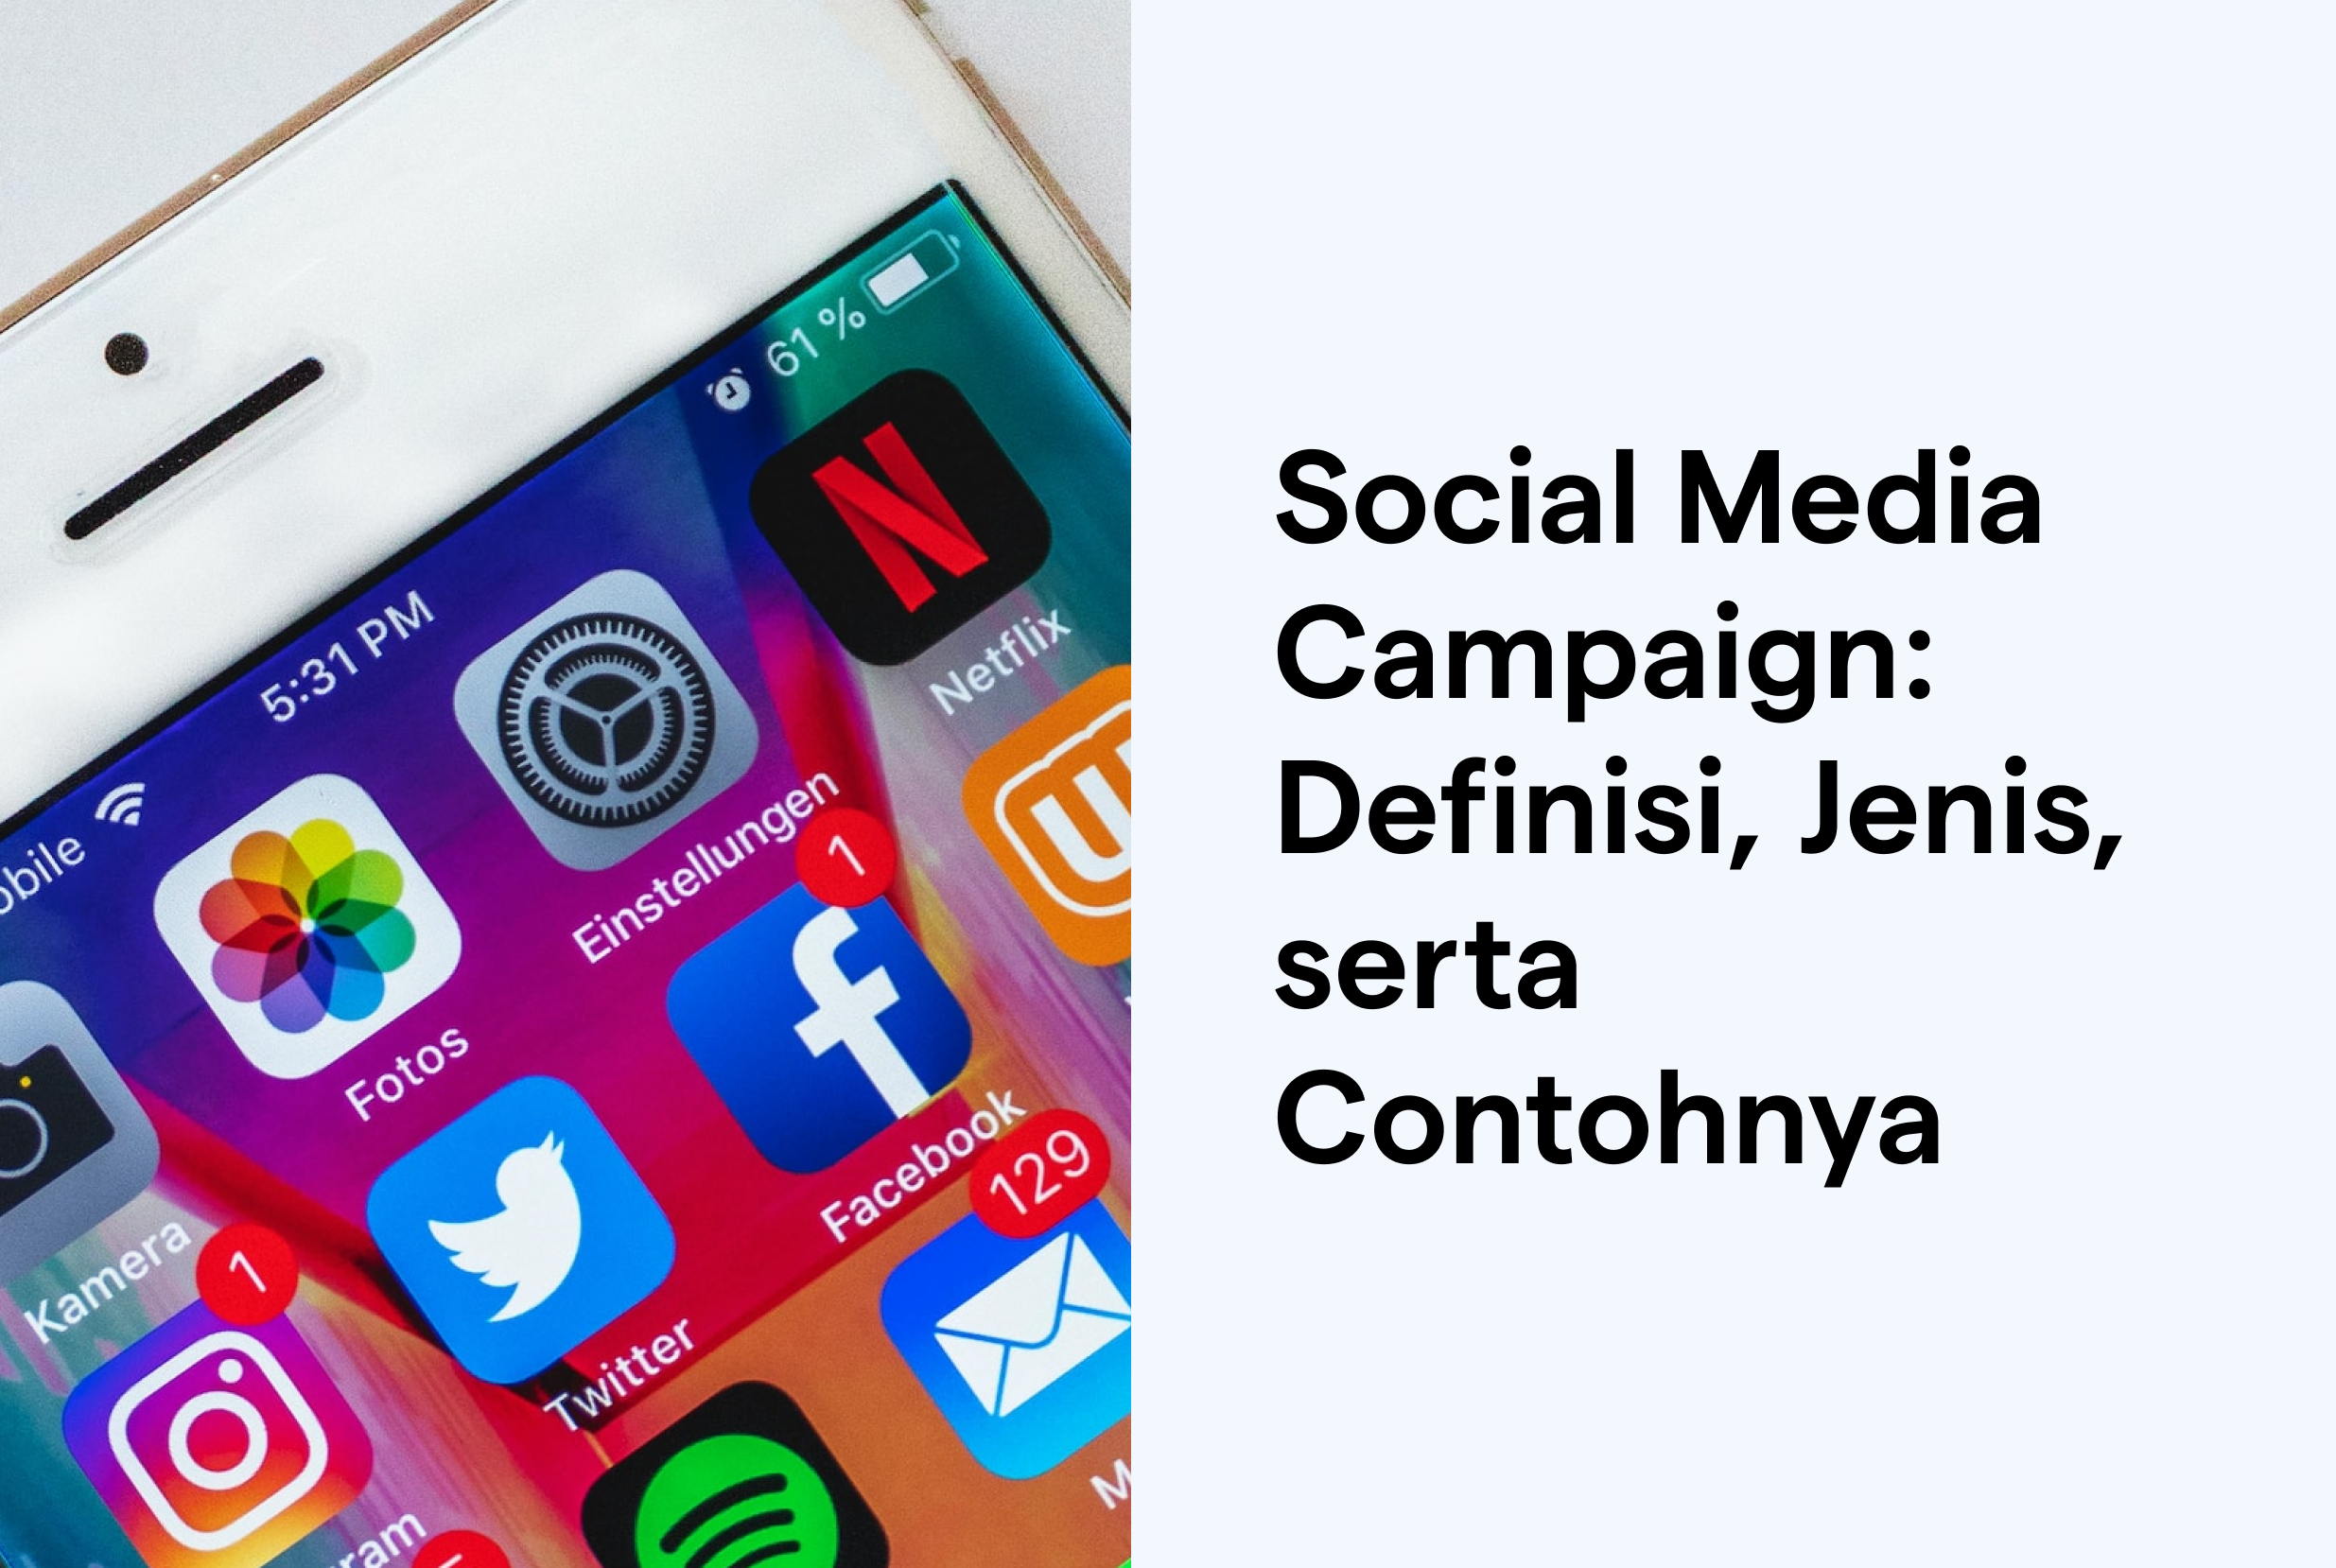 Social Media Campaign: Definisi, Jenis, serta Contohnya